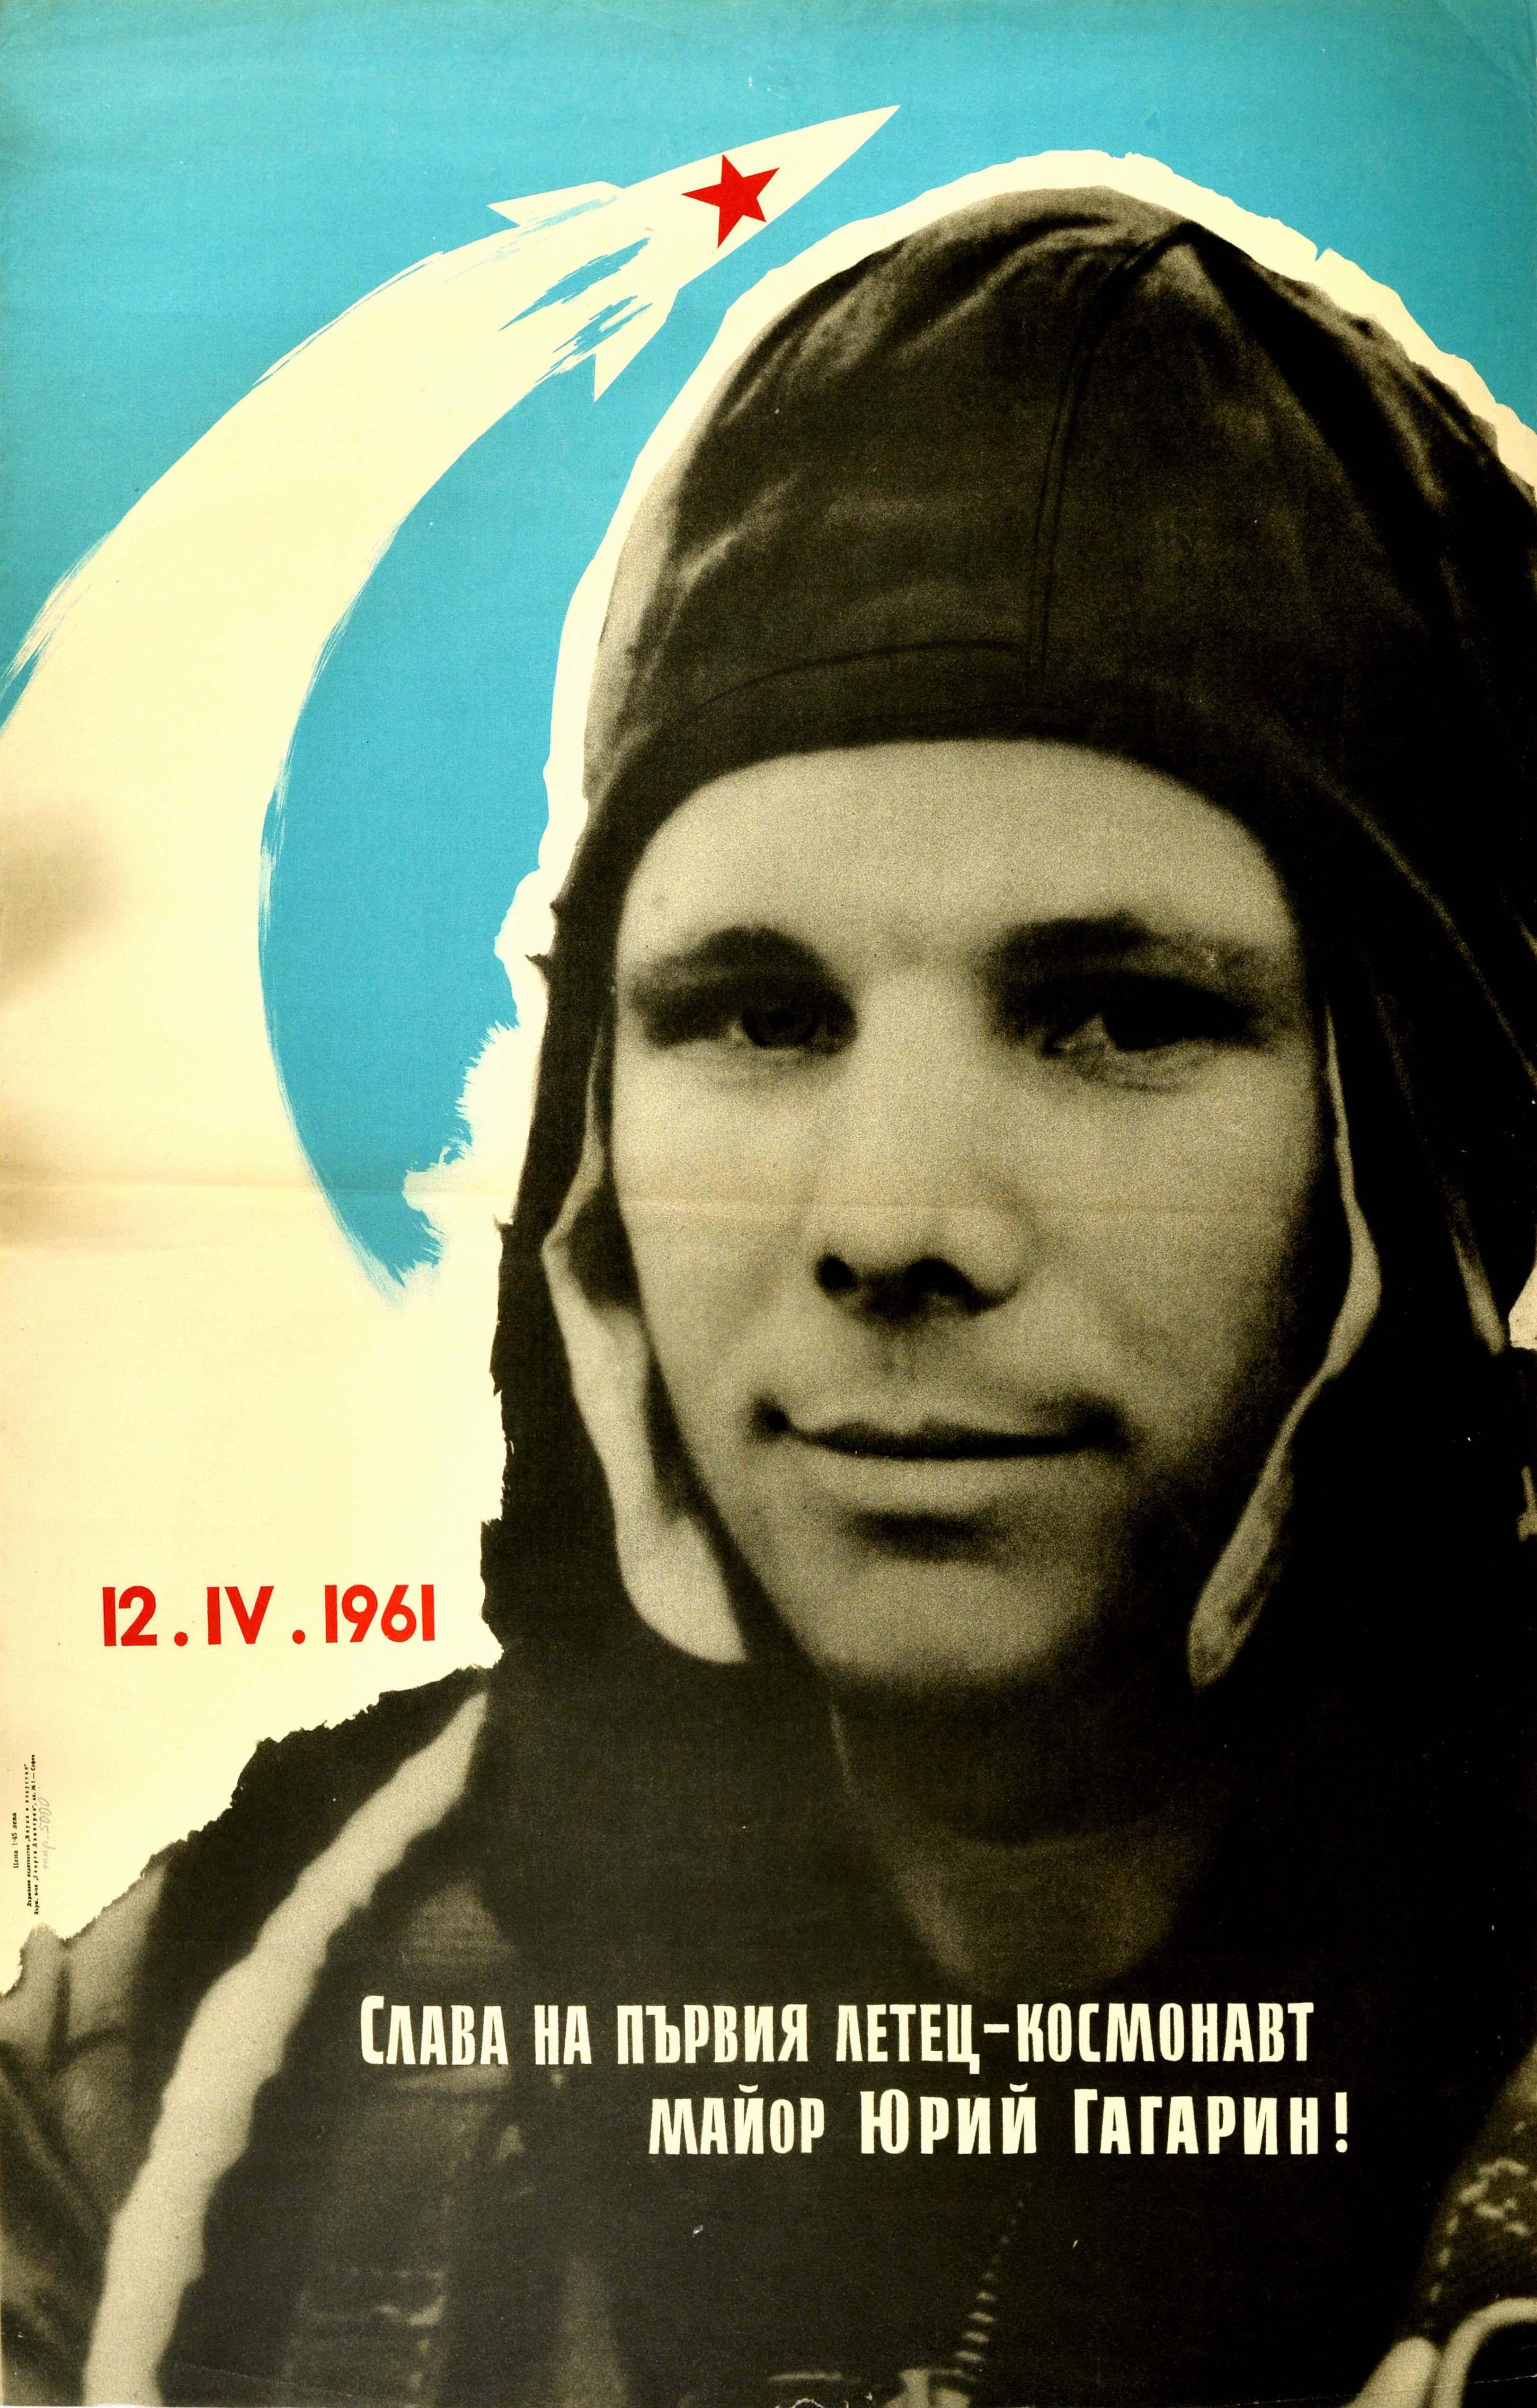 Unknown Print - Original Vintage Poster Glory To The First Cosmonaut Pilot Major Yuri Gagarin